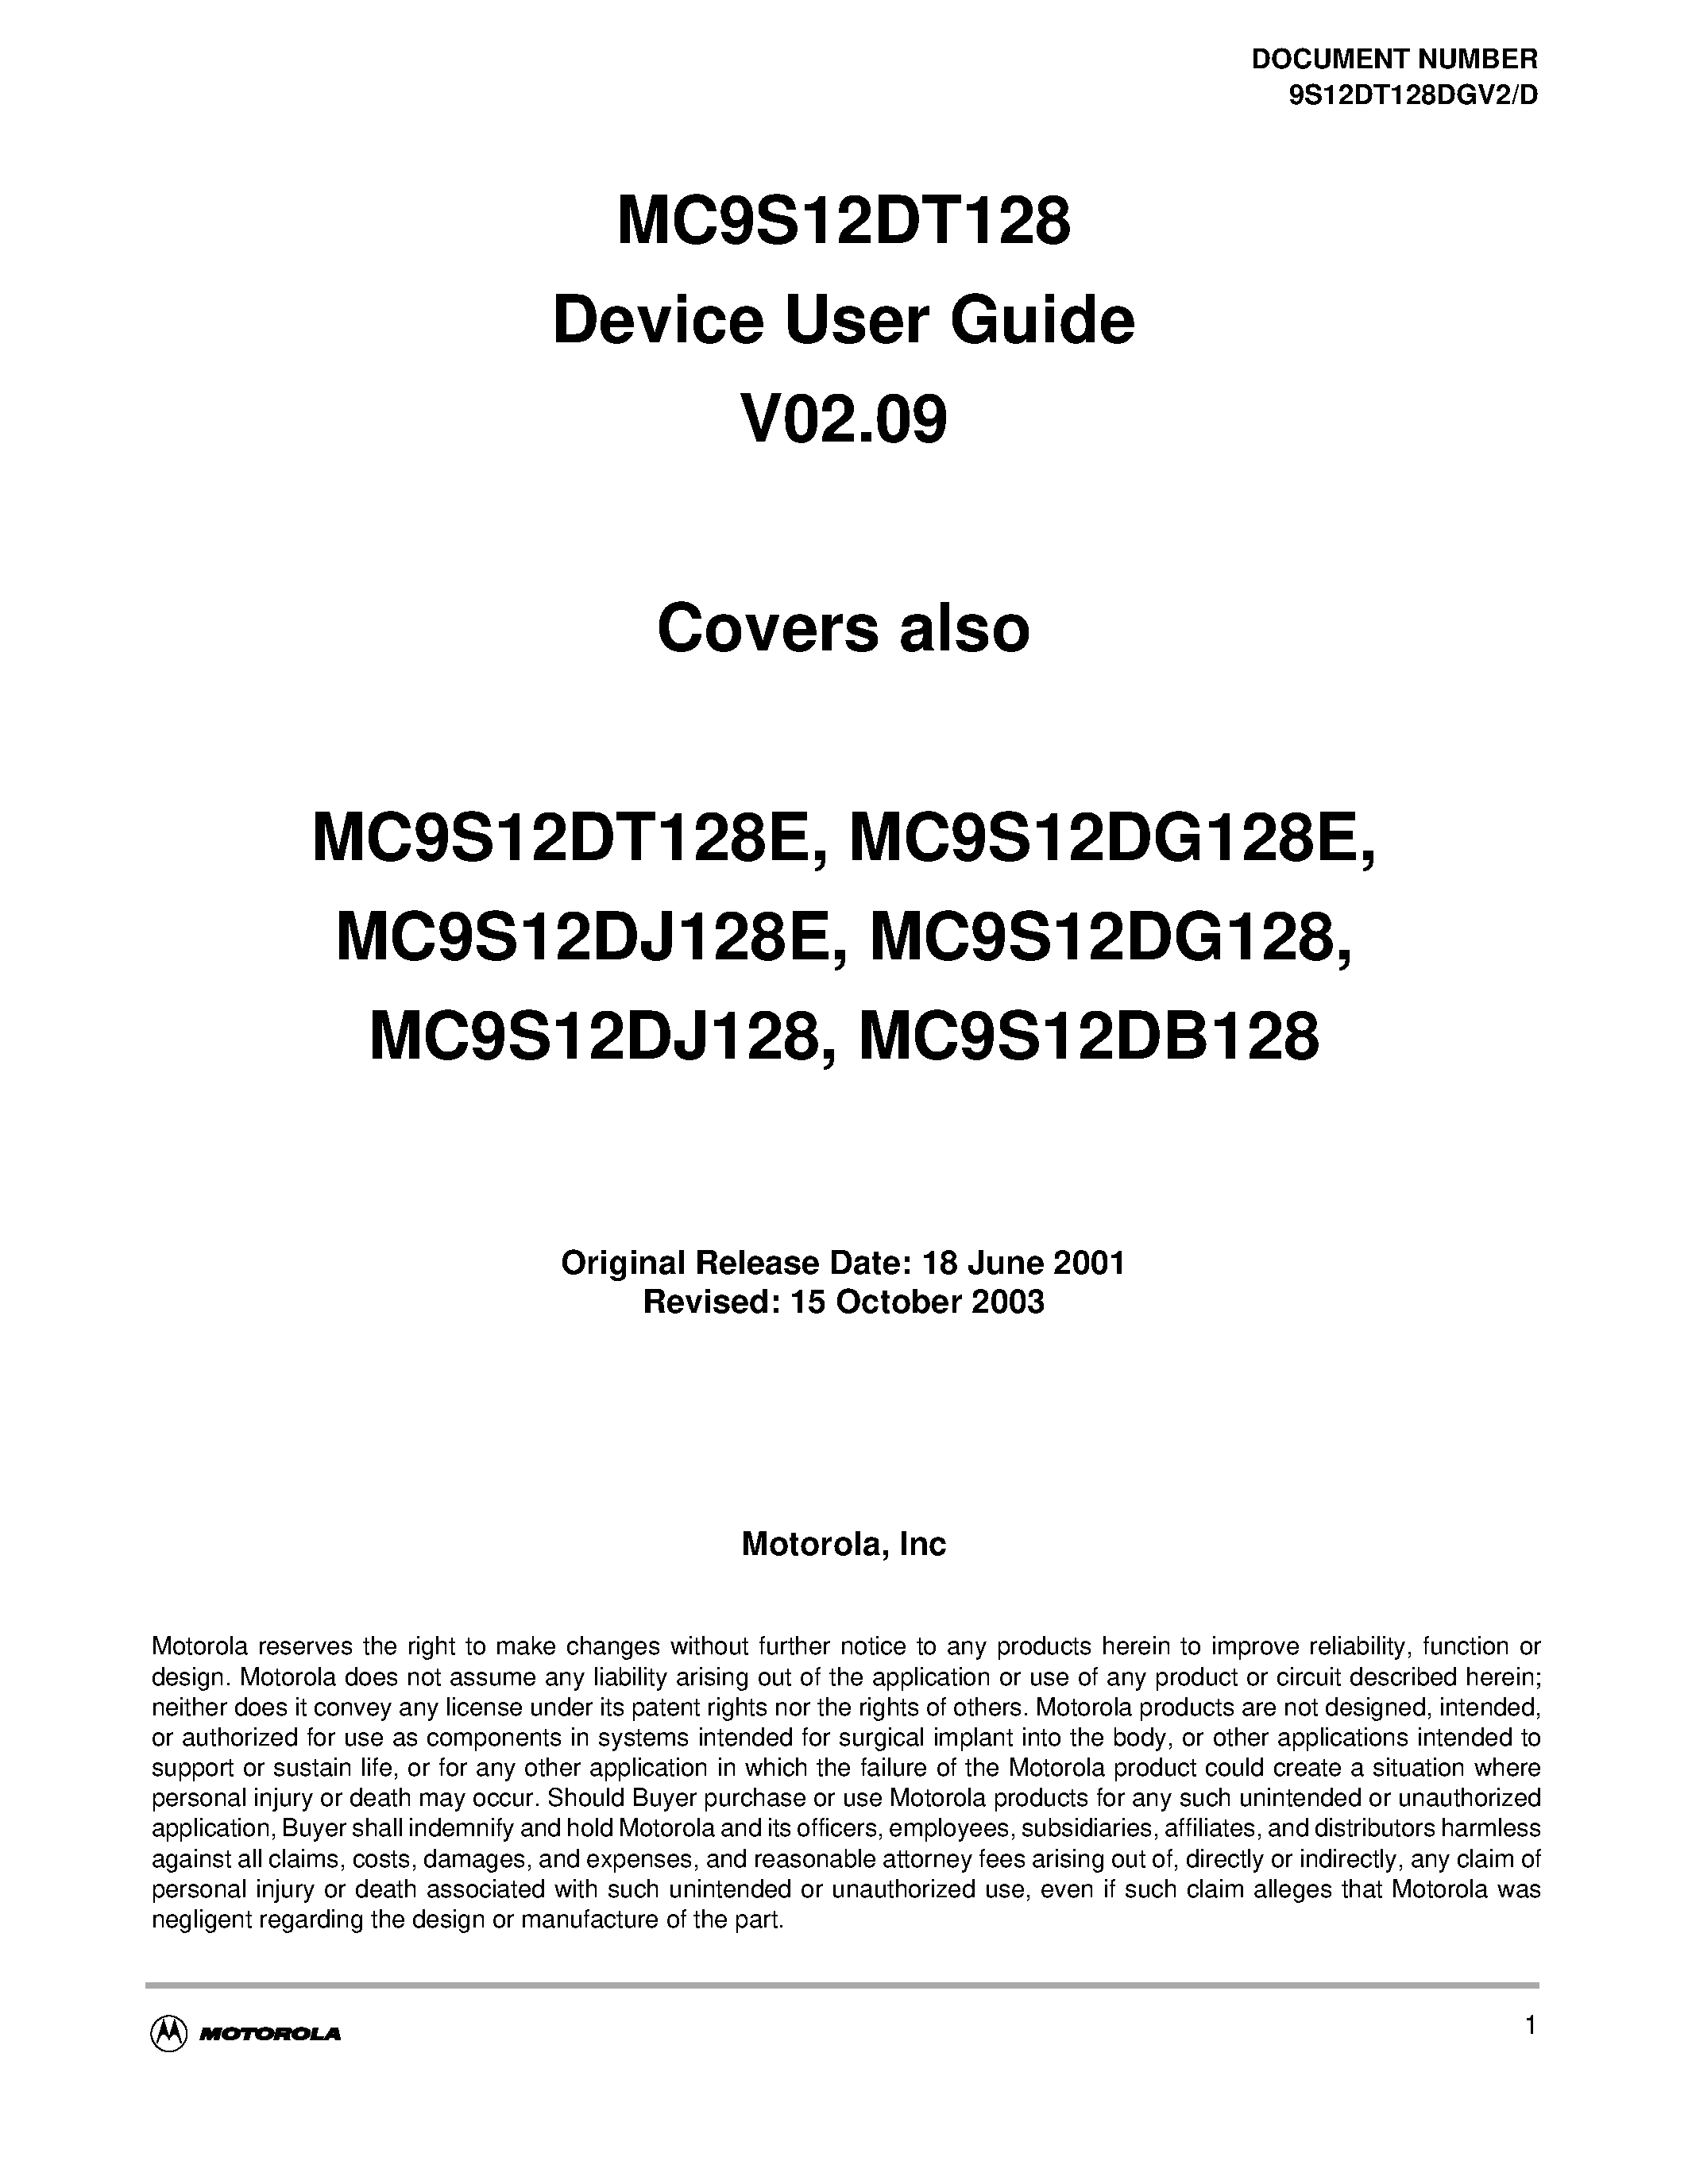 Даташит S12OSCV2 - MC9S12DT128 Device User Guide V02.09 страница 1